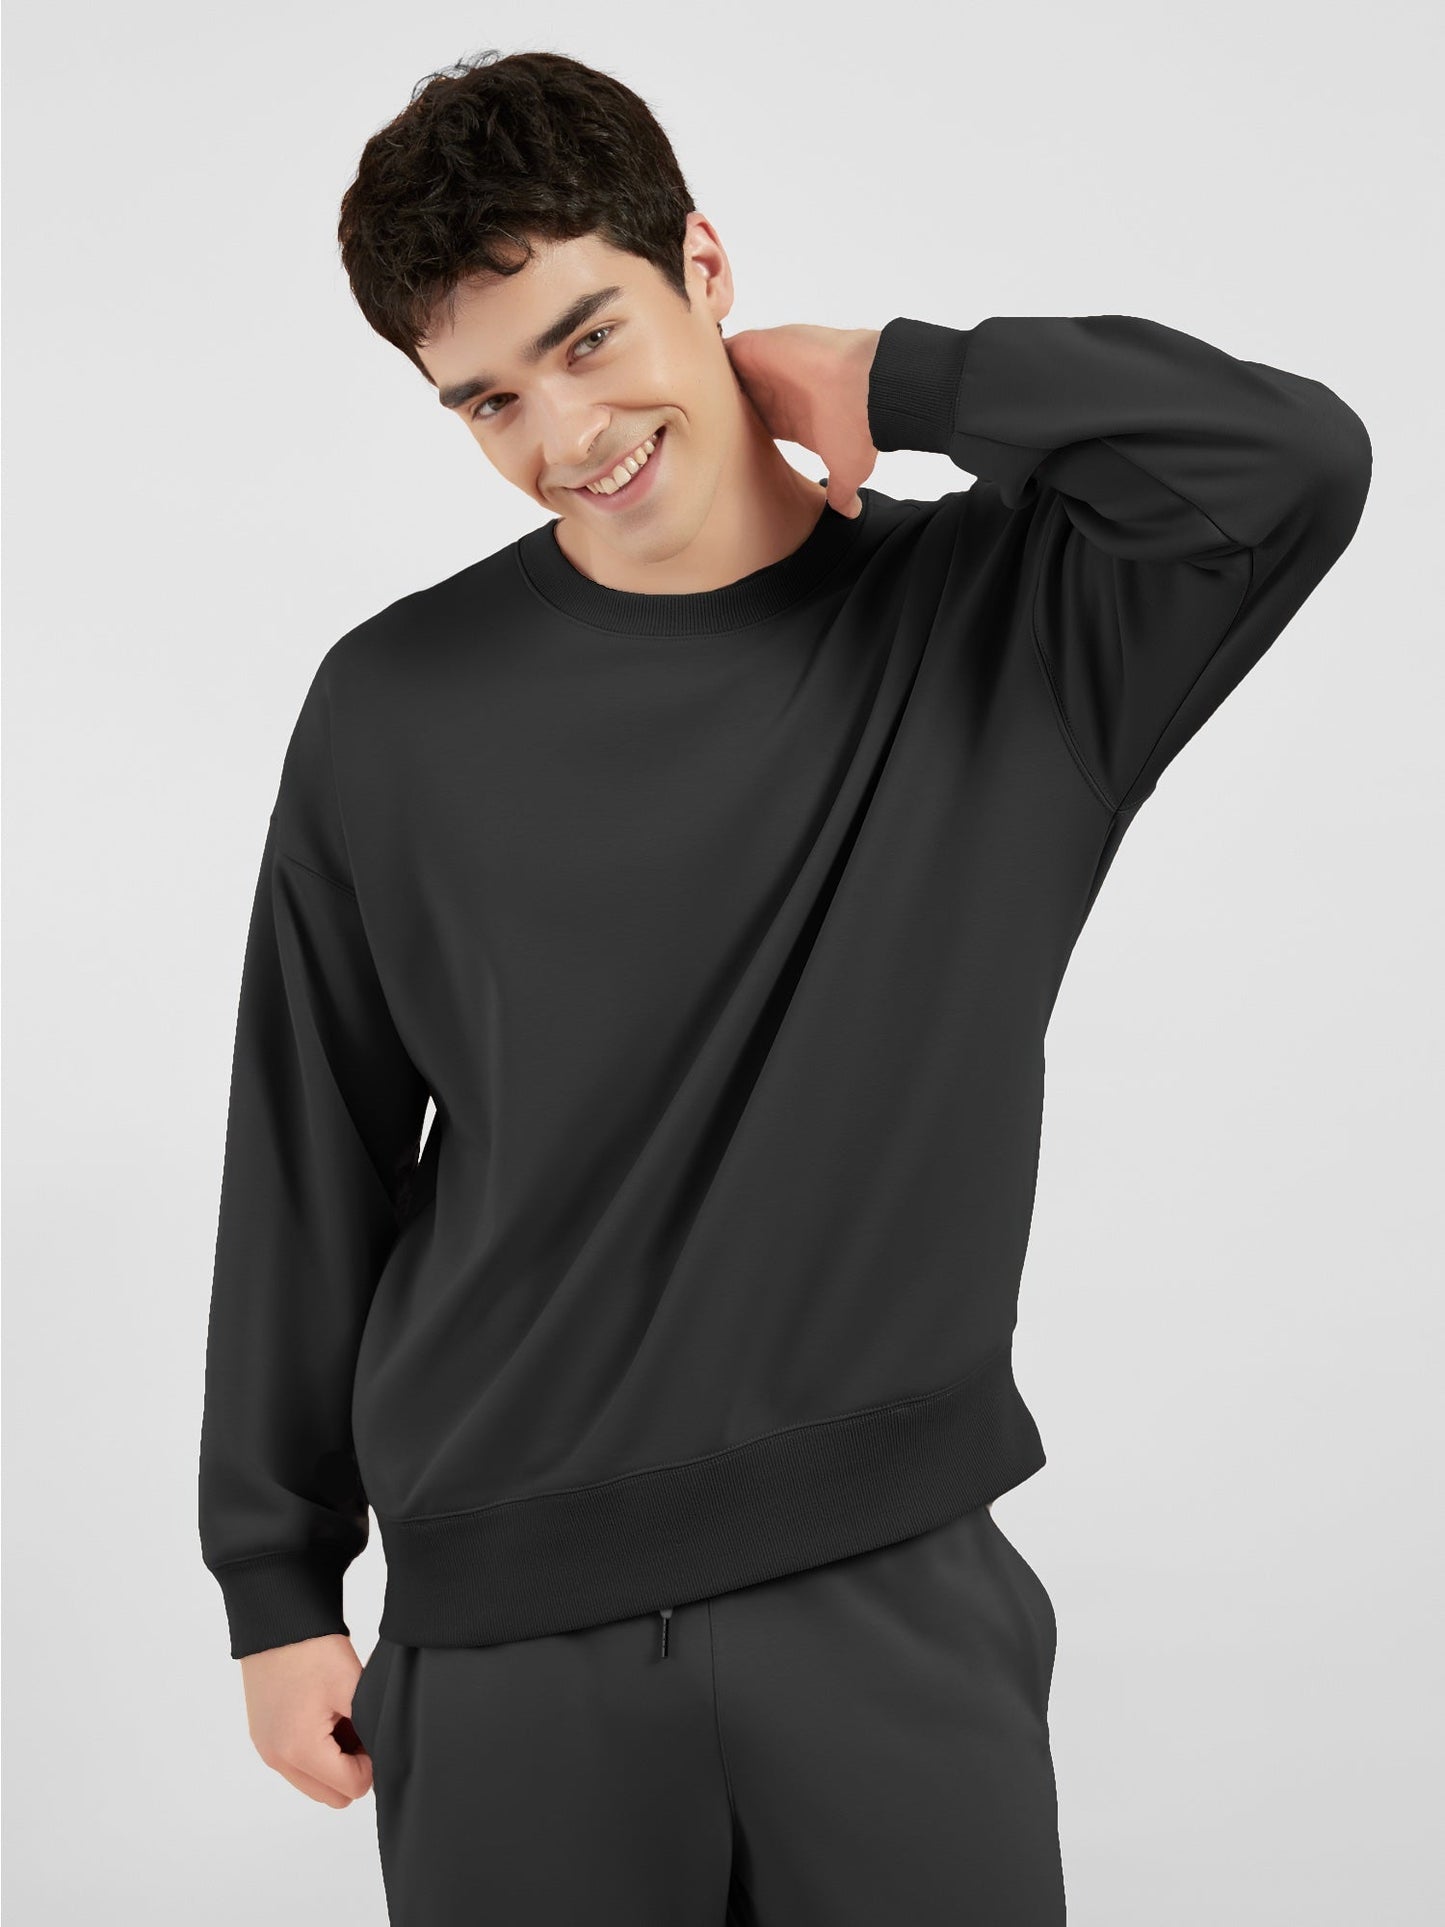 Cubby Sweater for Men｜Original Colors